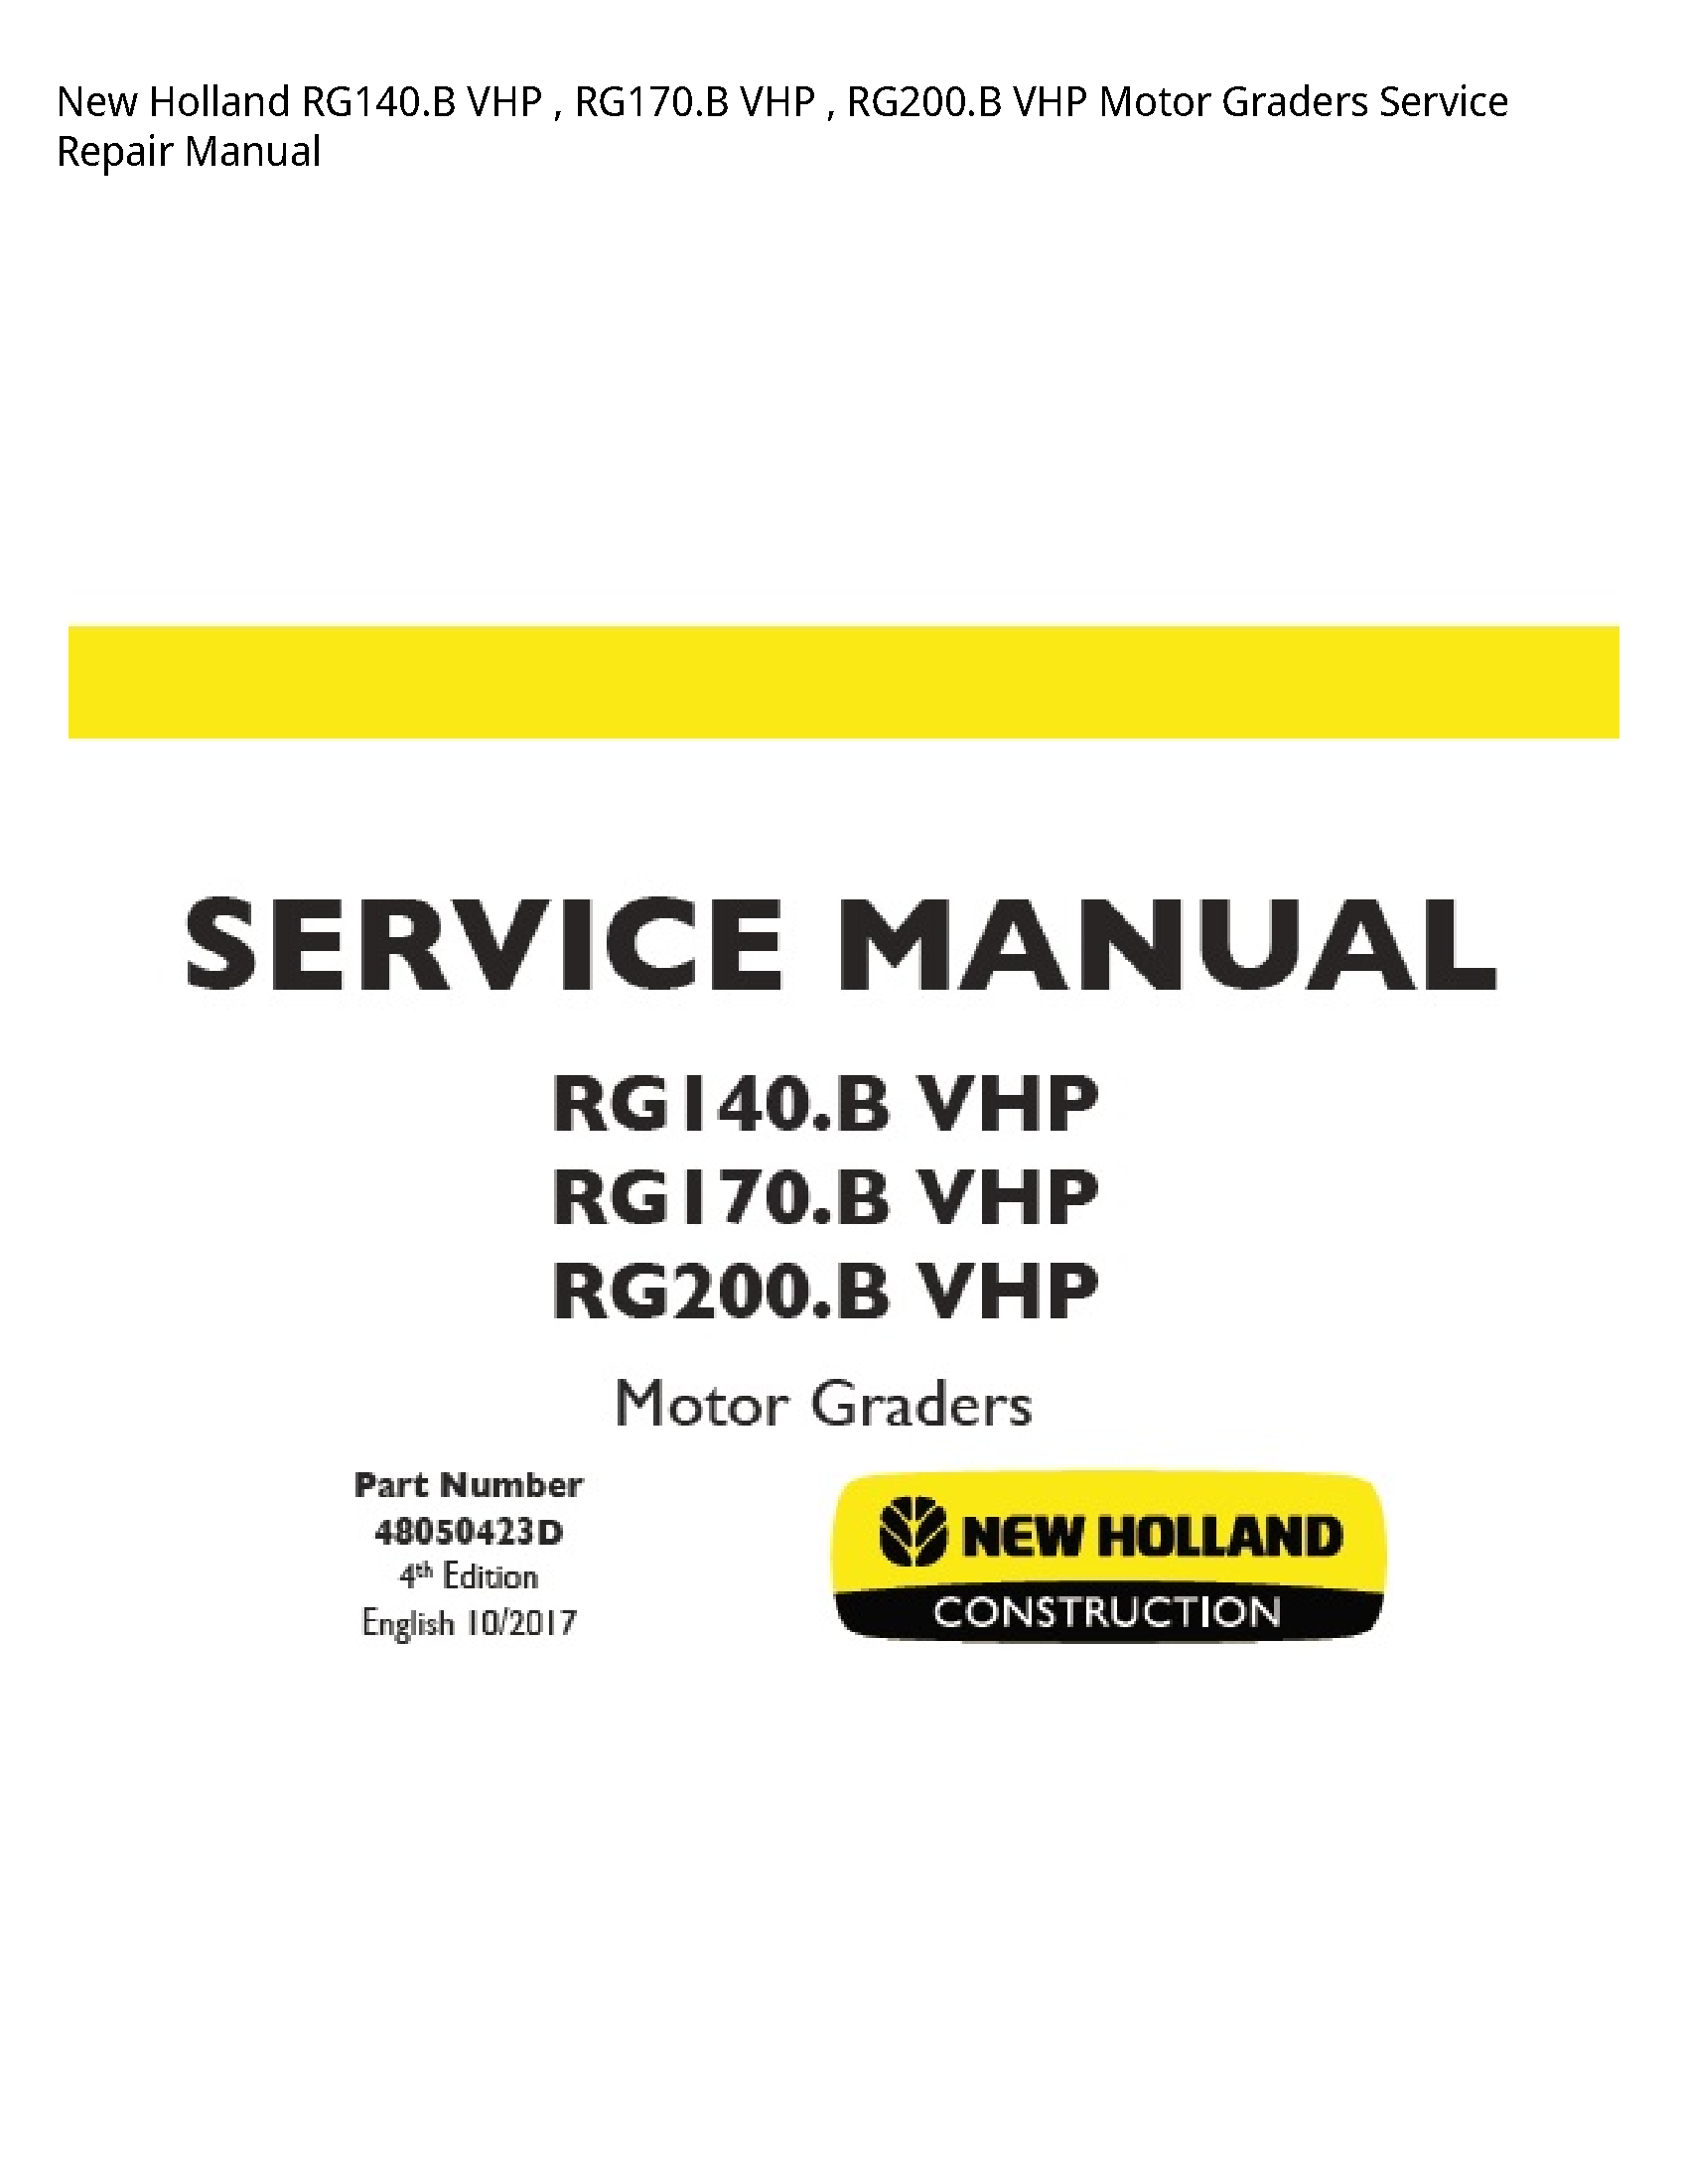 New Holland RG140.B VHP VHP VHP Motor Graders manual